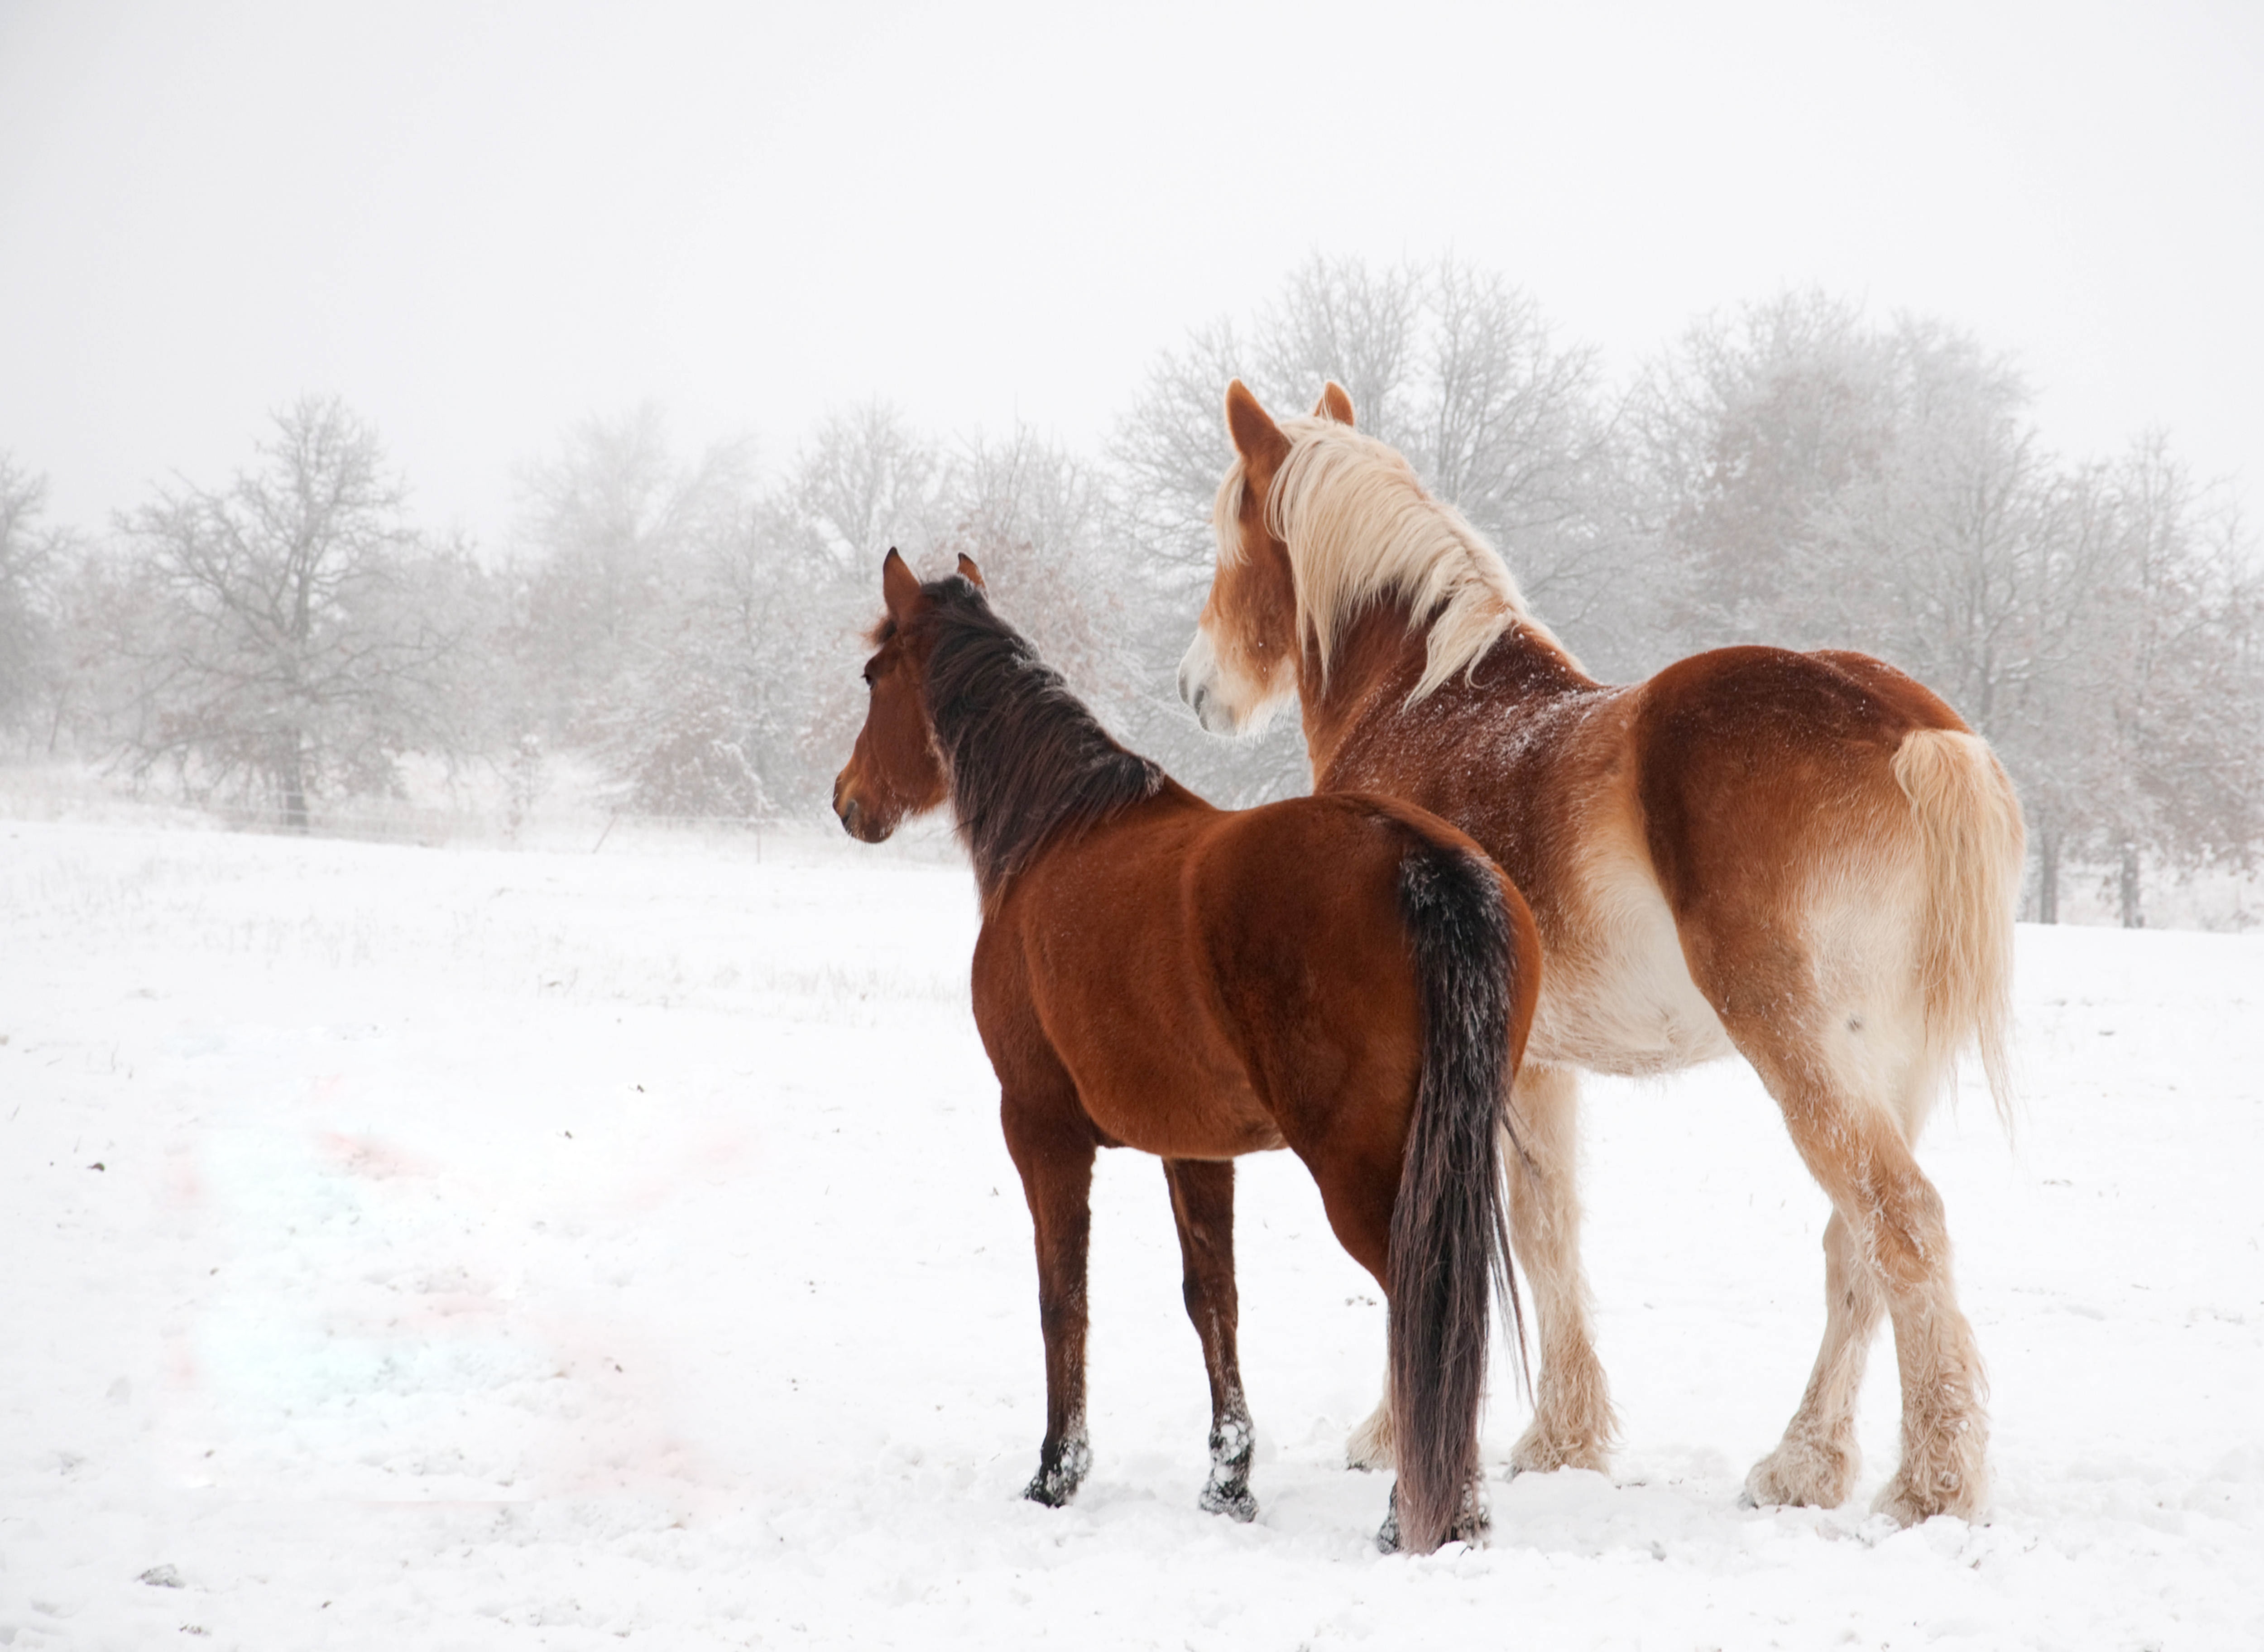 New Lock Screen Wallpapers animals, winter, horses, snow, couple, pair